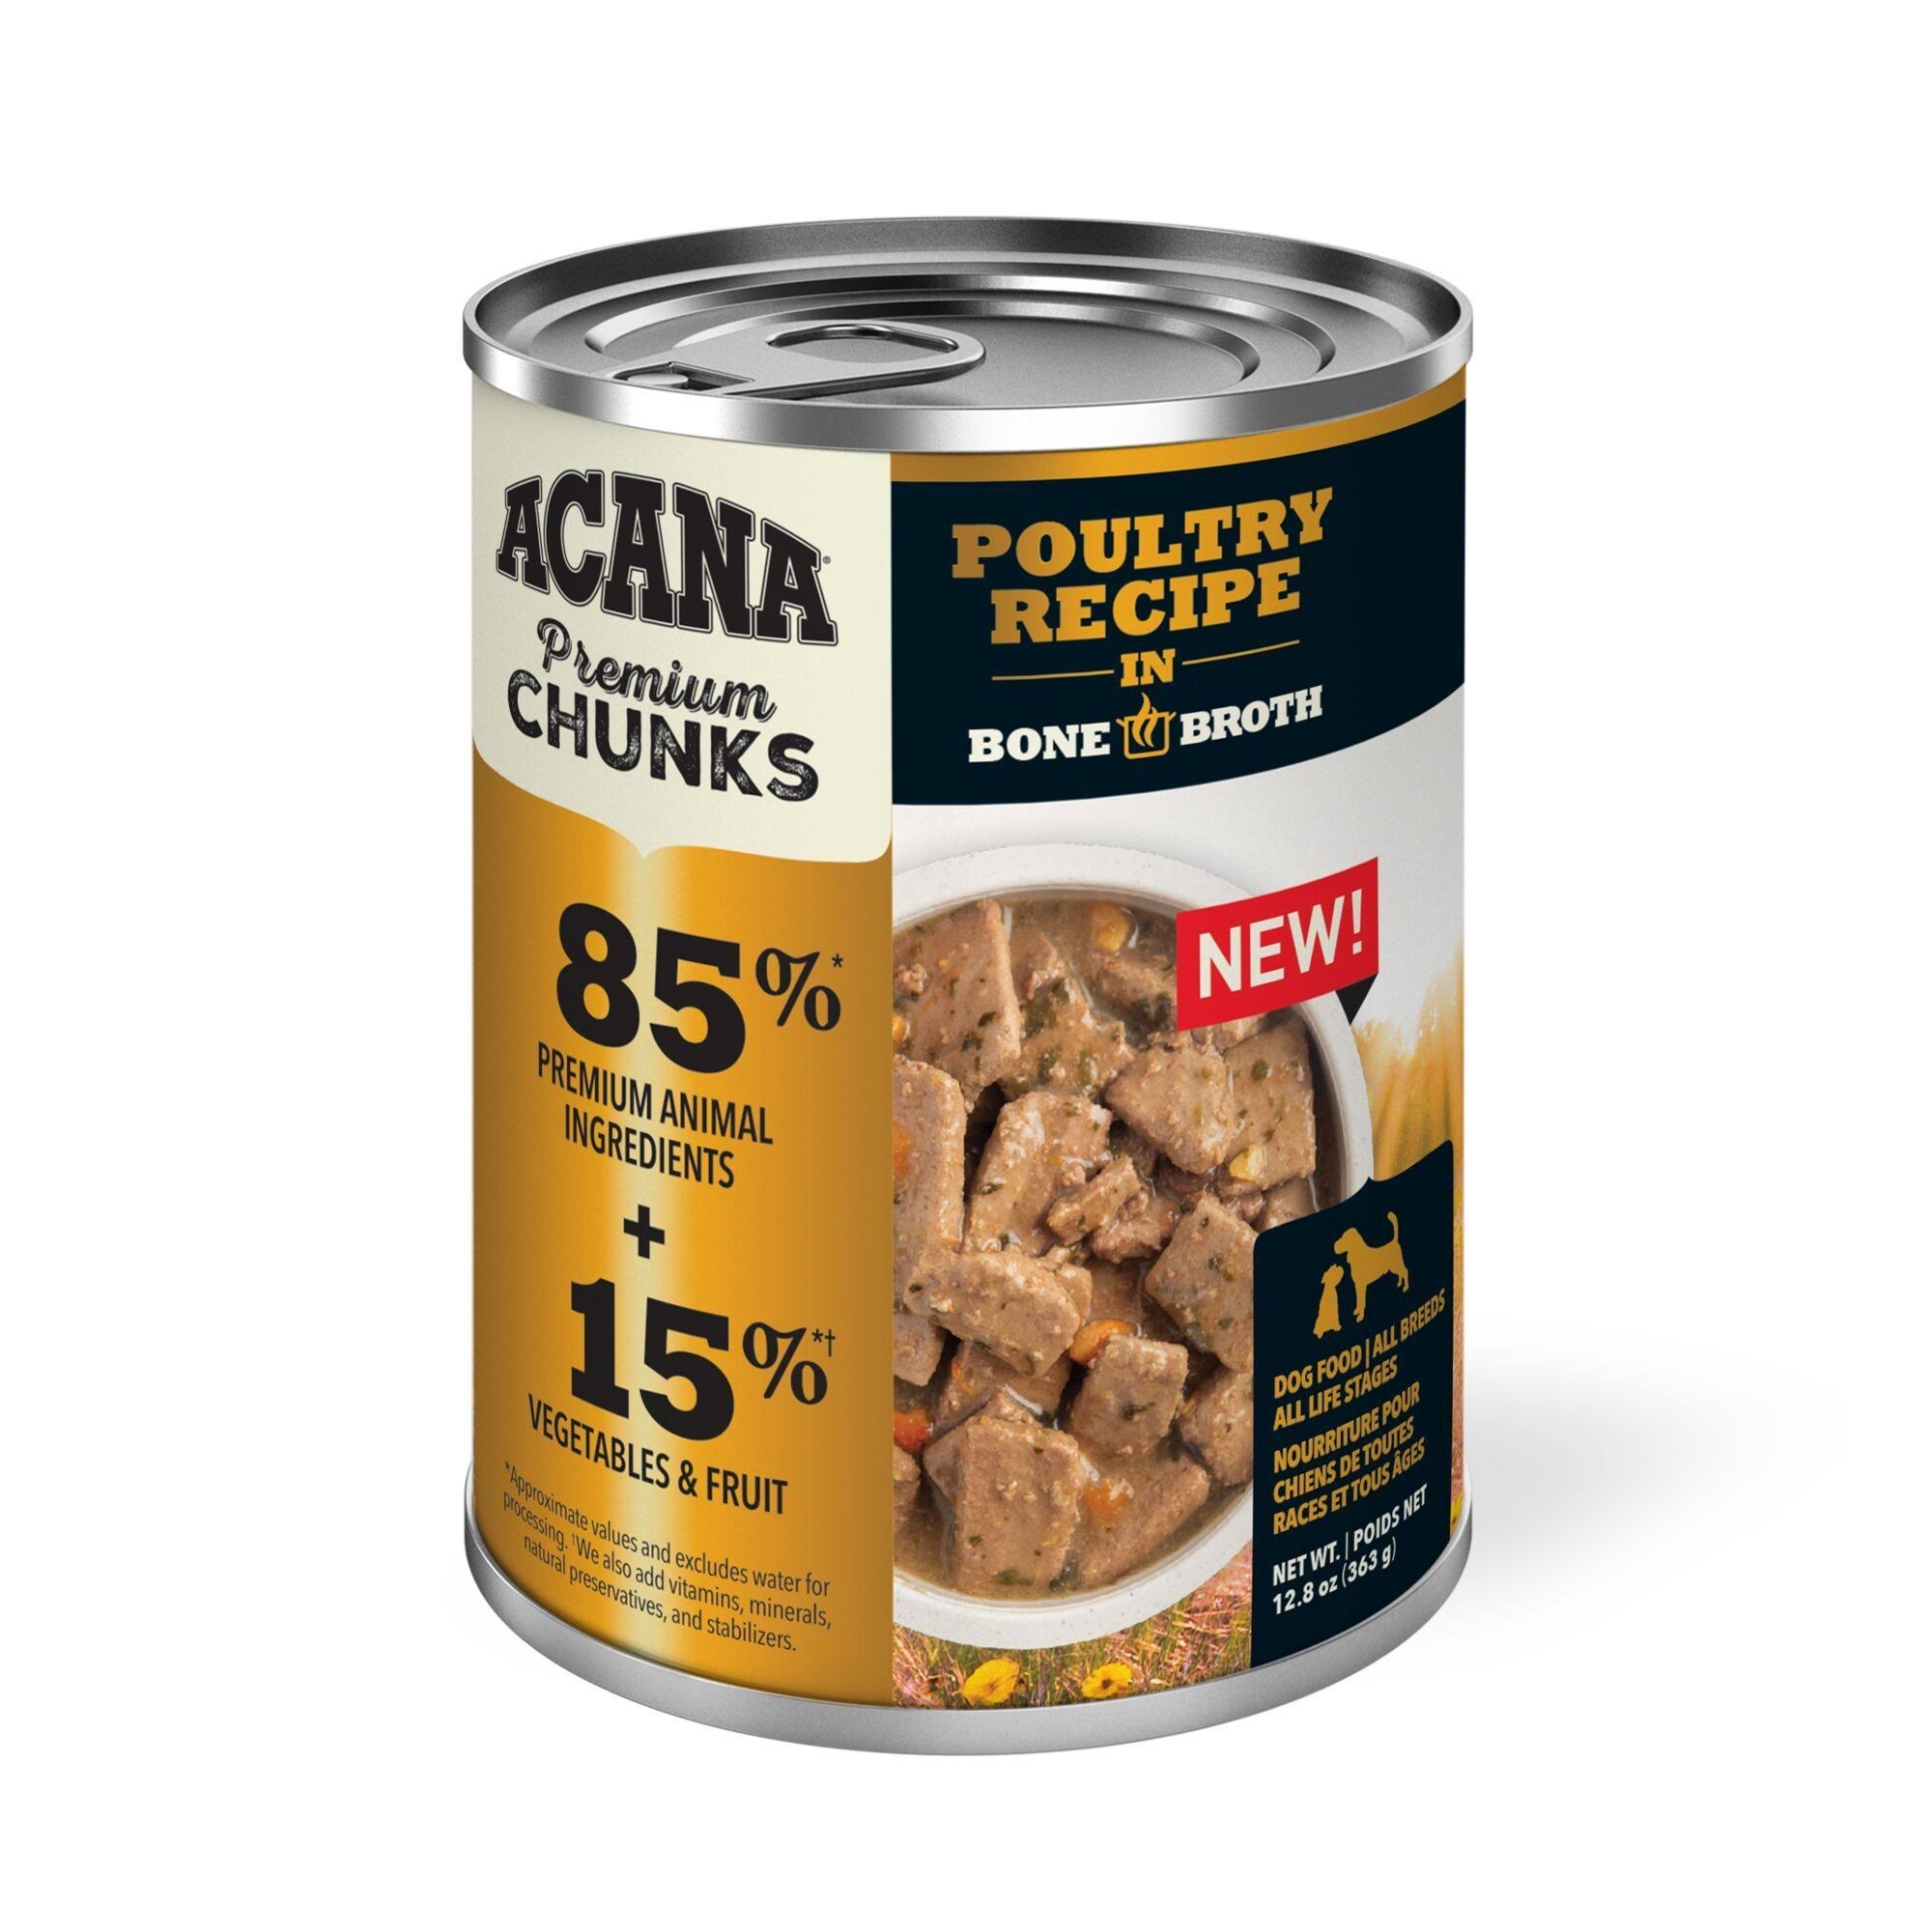 ACANA Premium Chunks Poultry Recipe in Bone Broth Dog Food | 12.8 oz